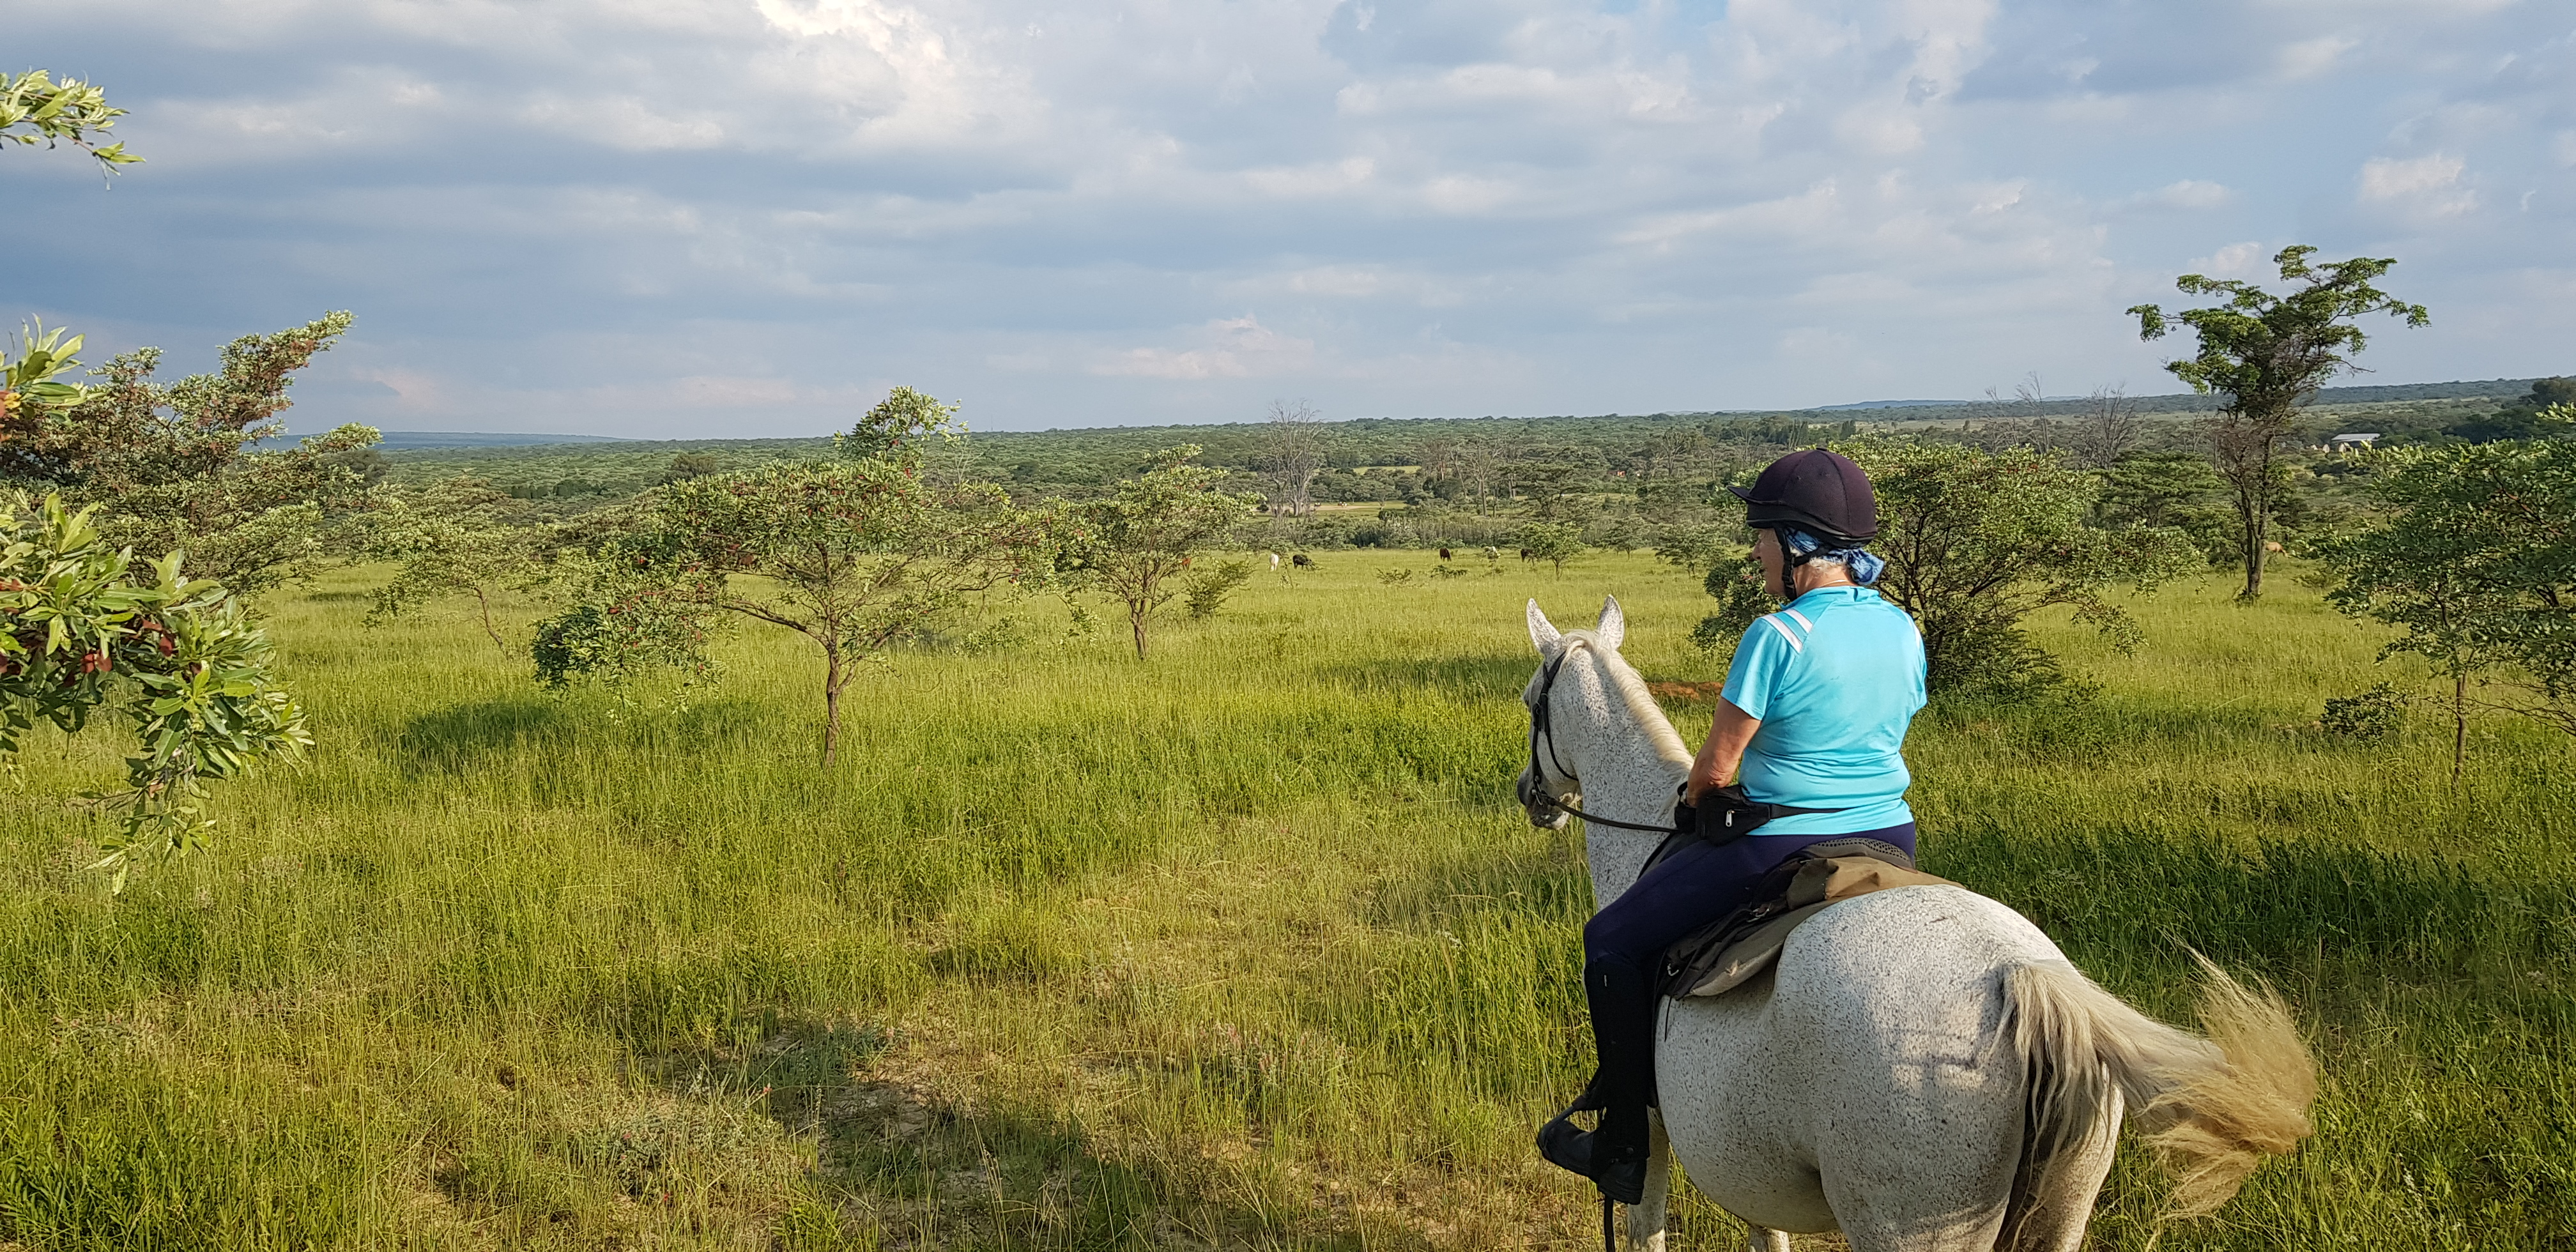 Horseback views in South Africa